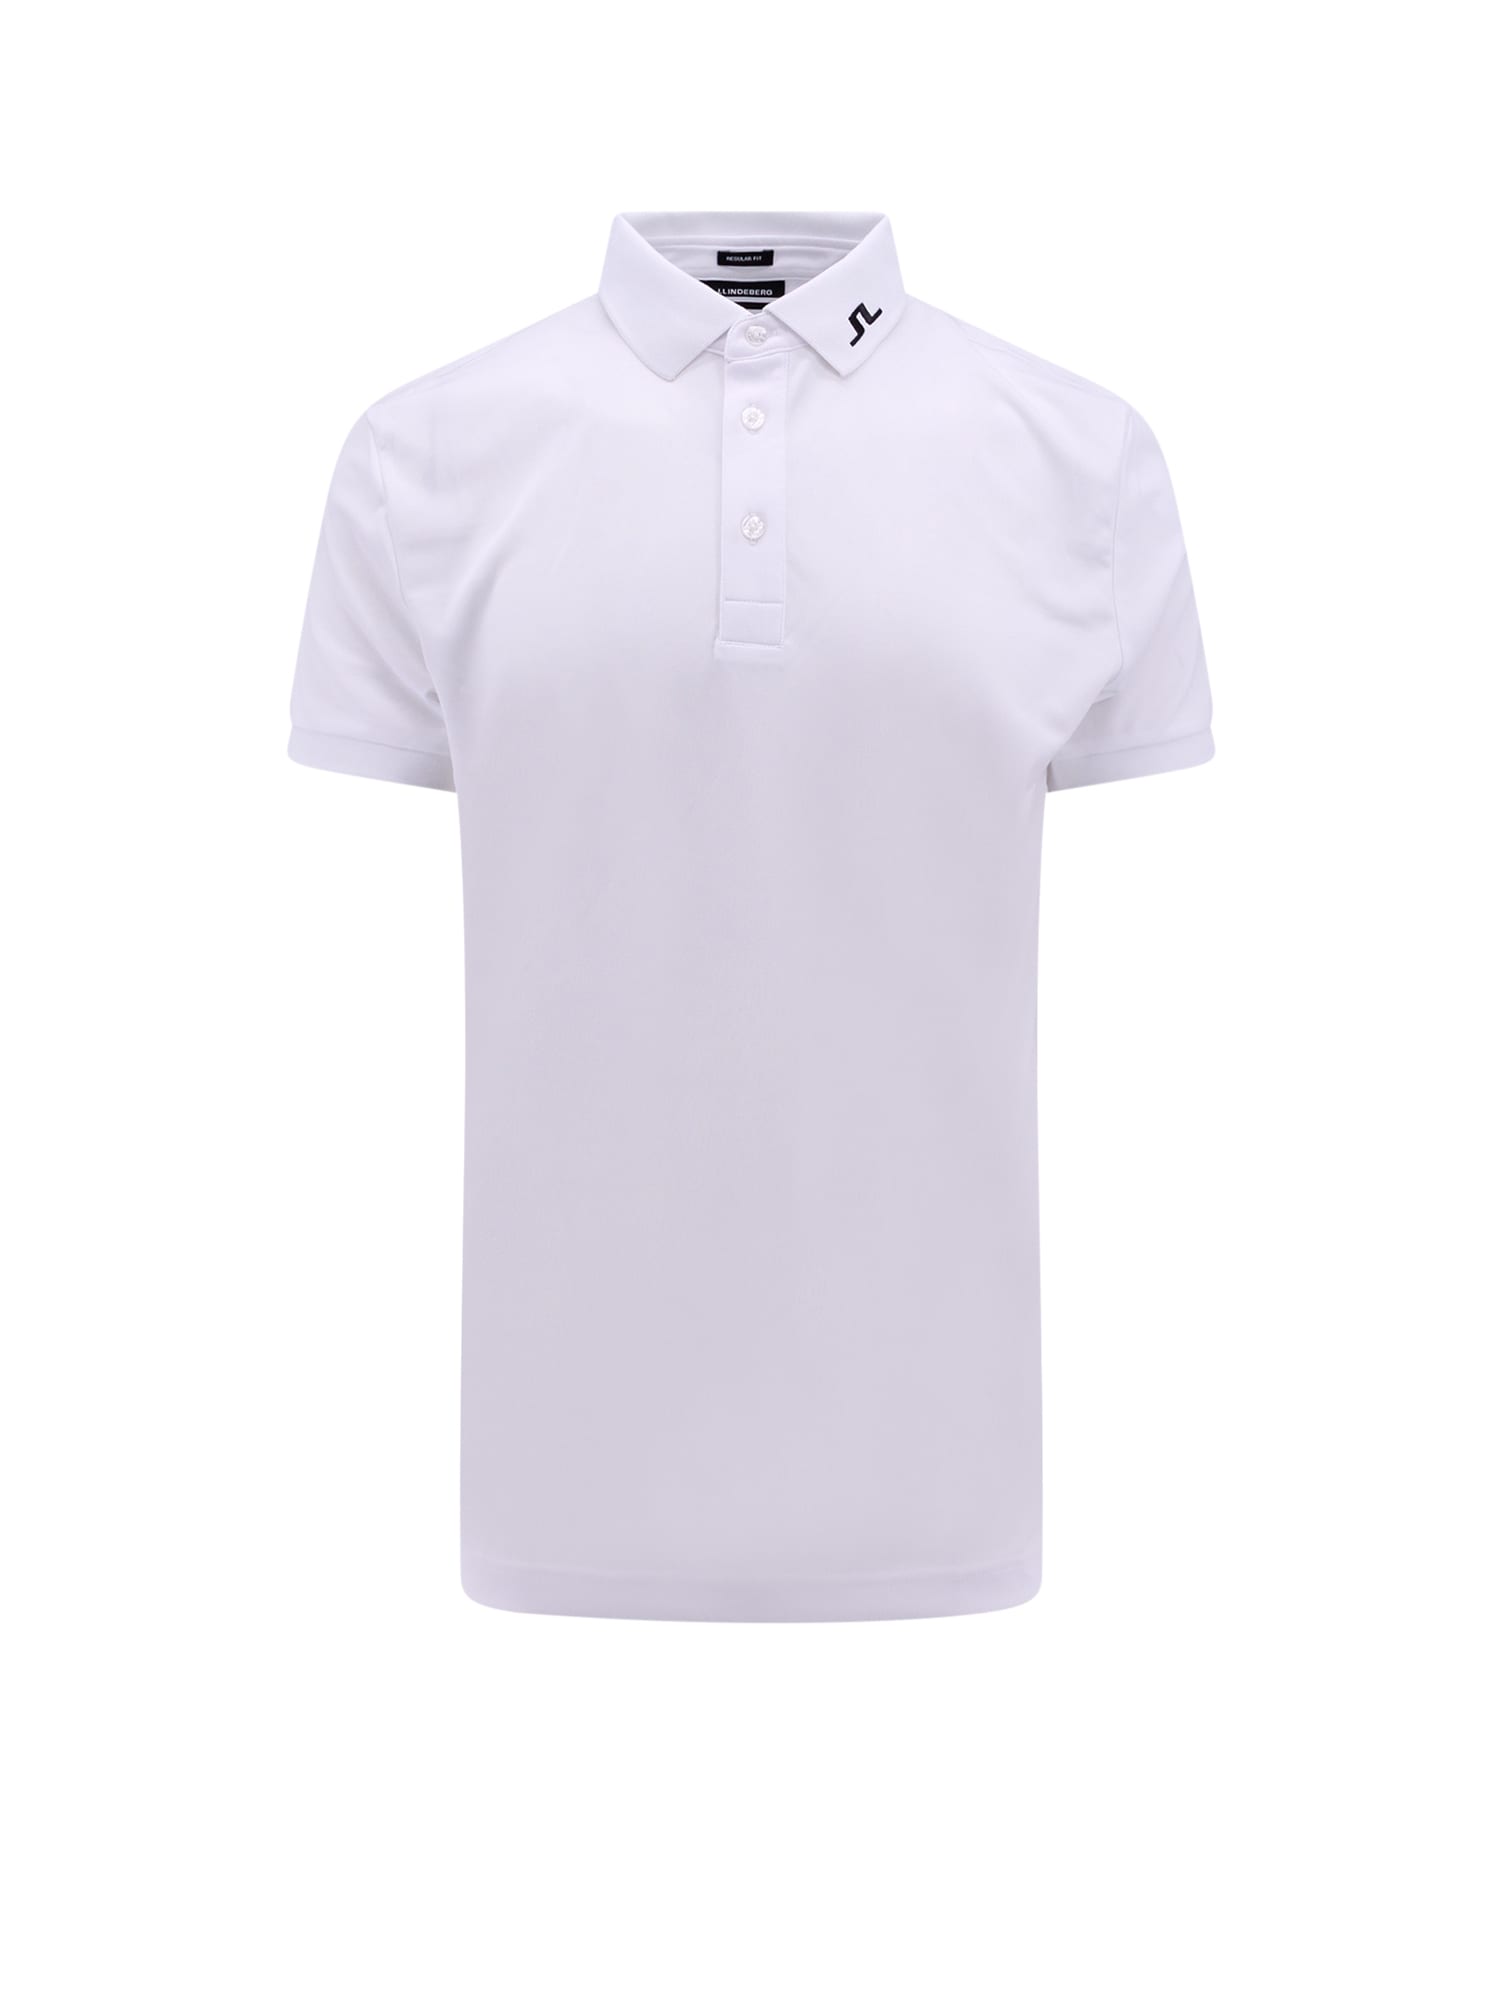 J. Lindeberg Kv Polo Shirt In White